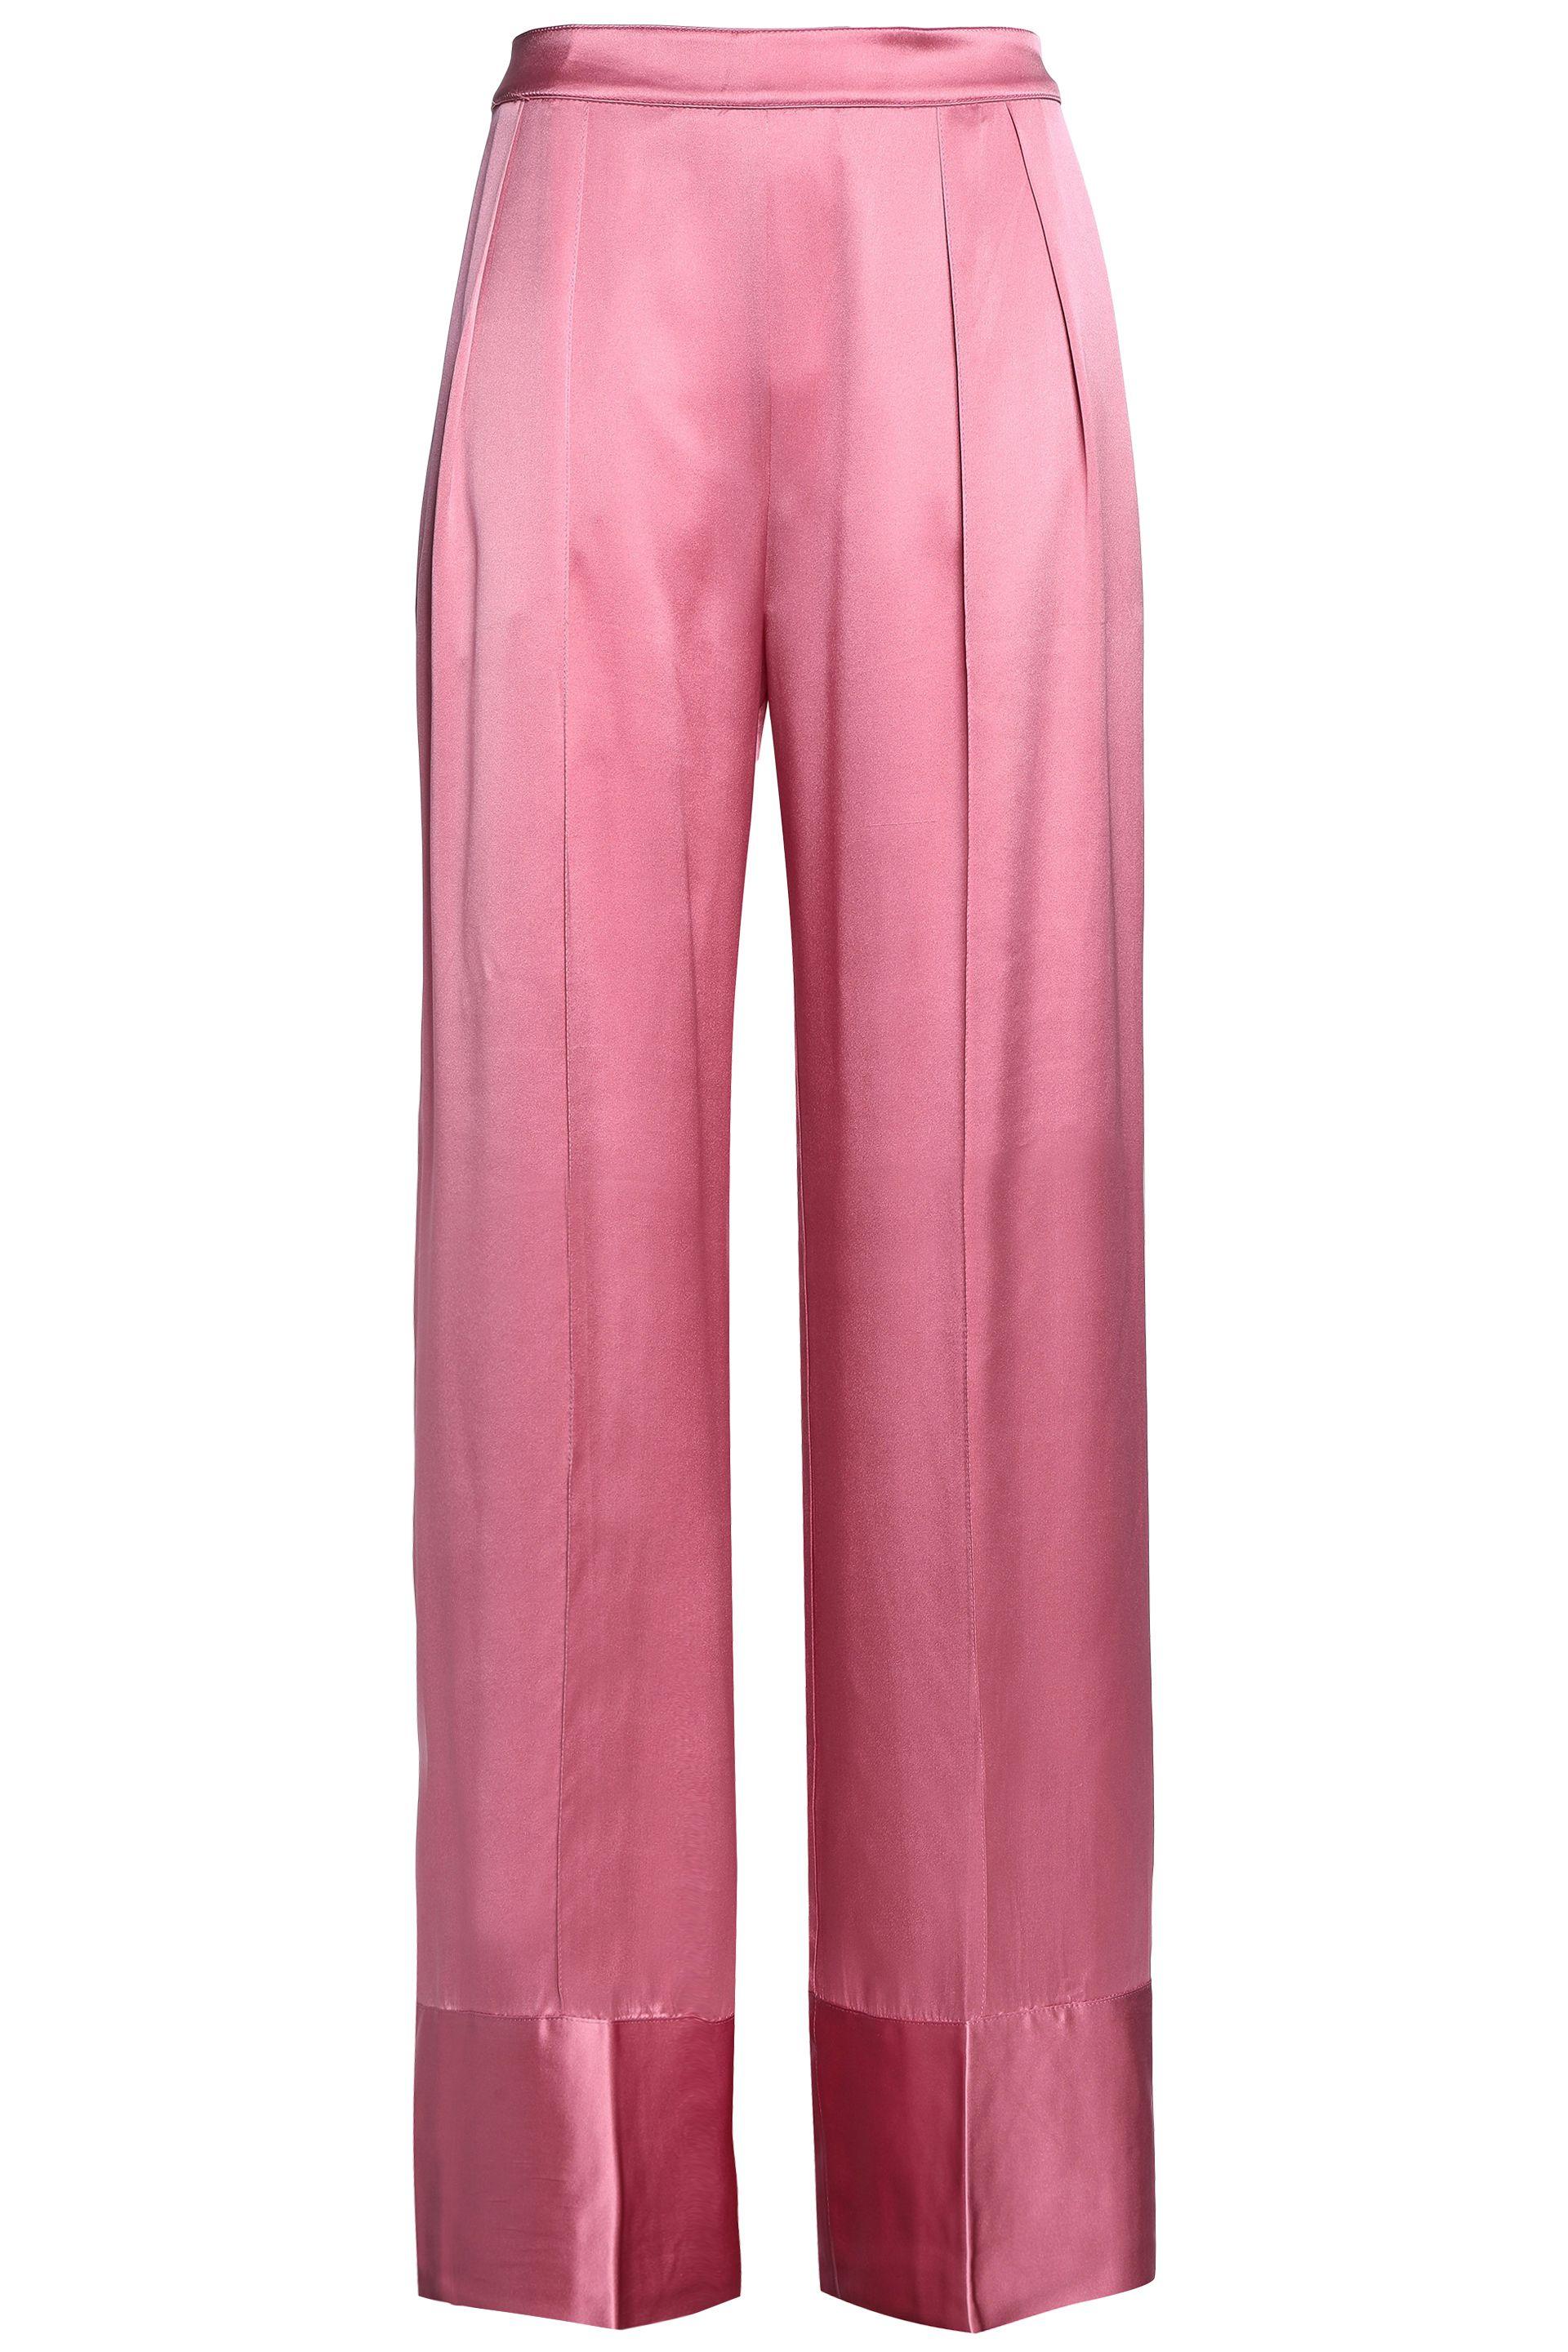 Michael Lo Sordo Wool Silk-satin Wide-leg Pants Pink - Lyst